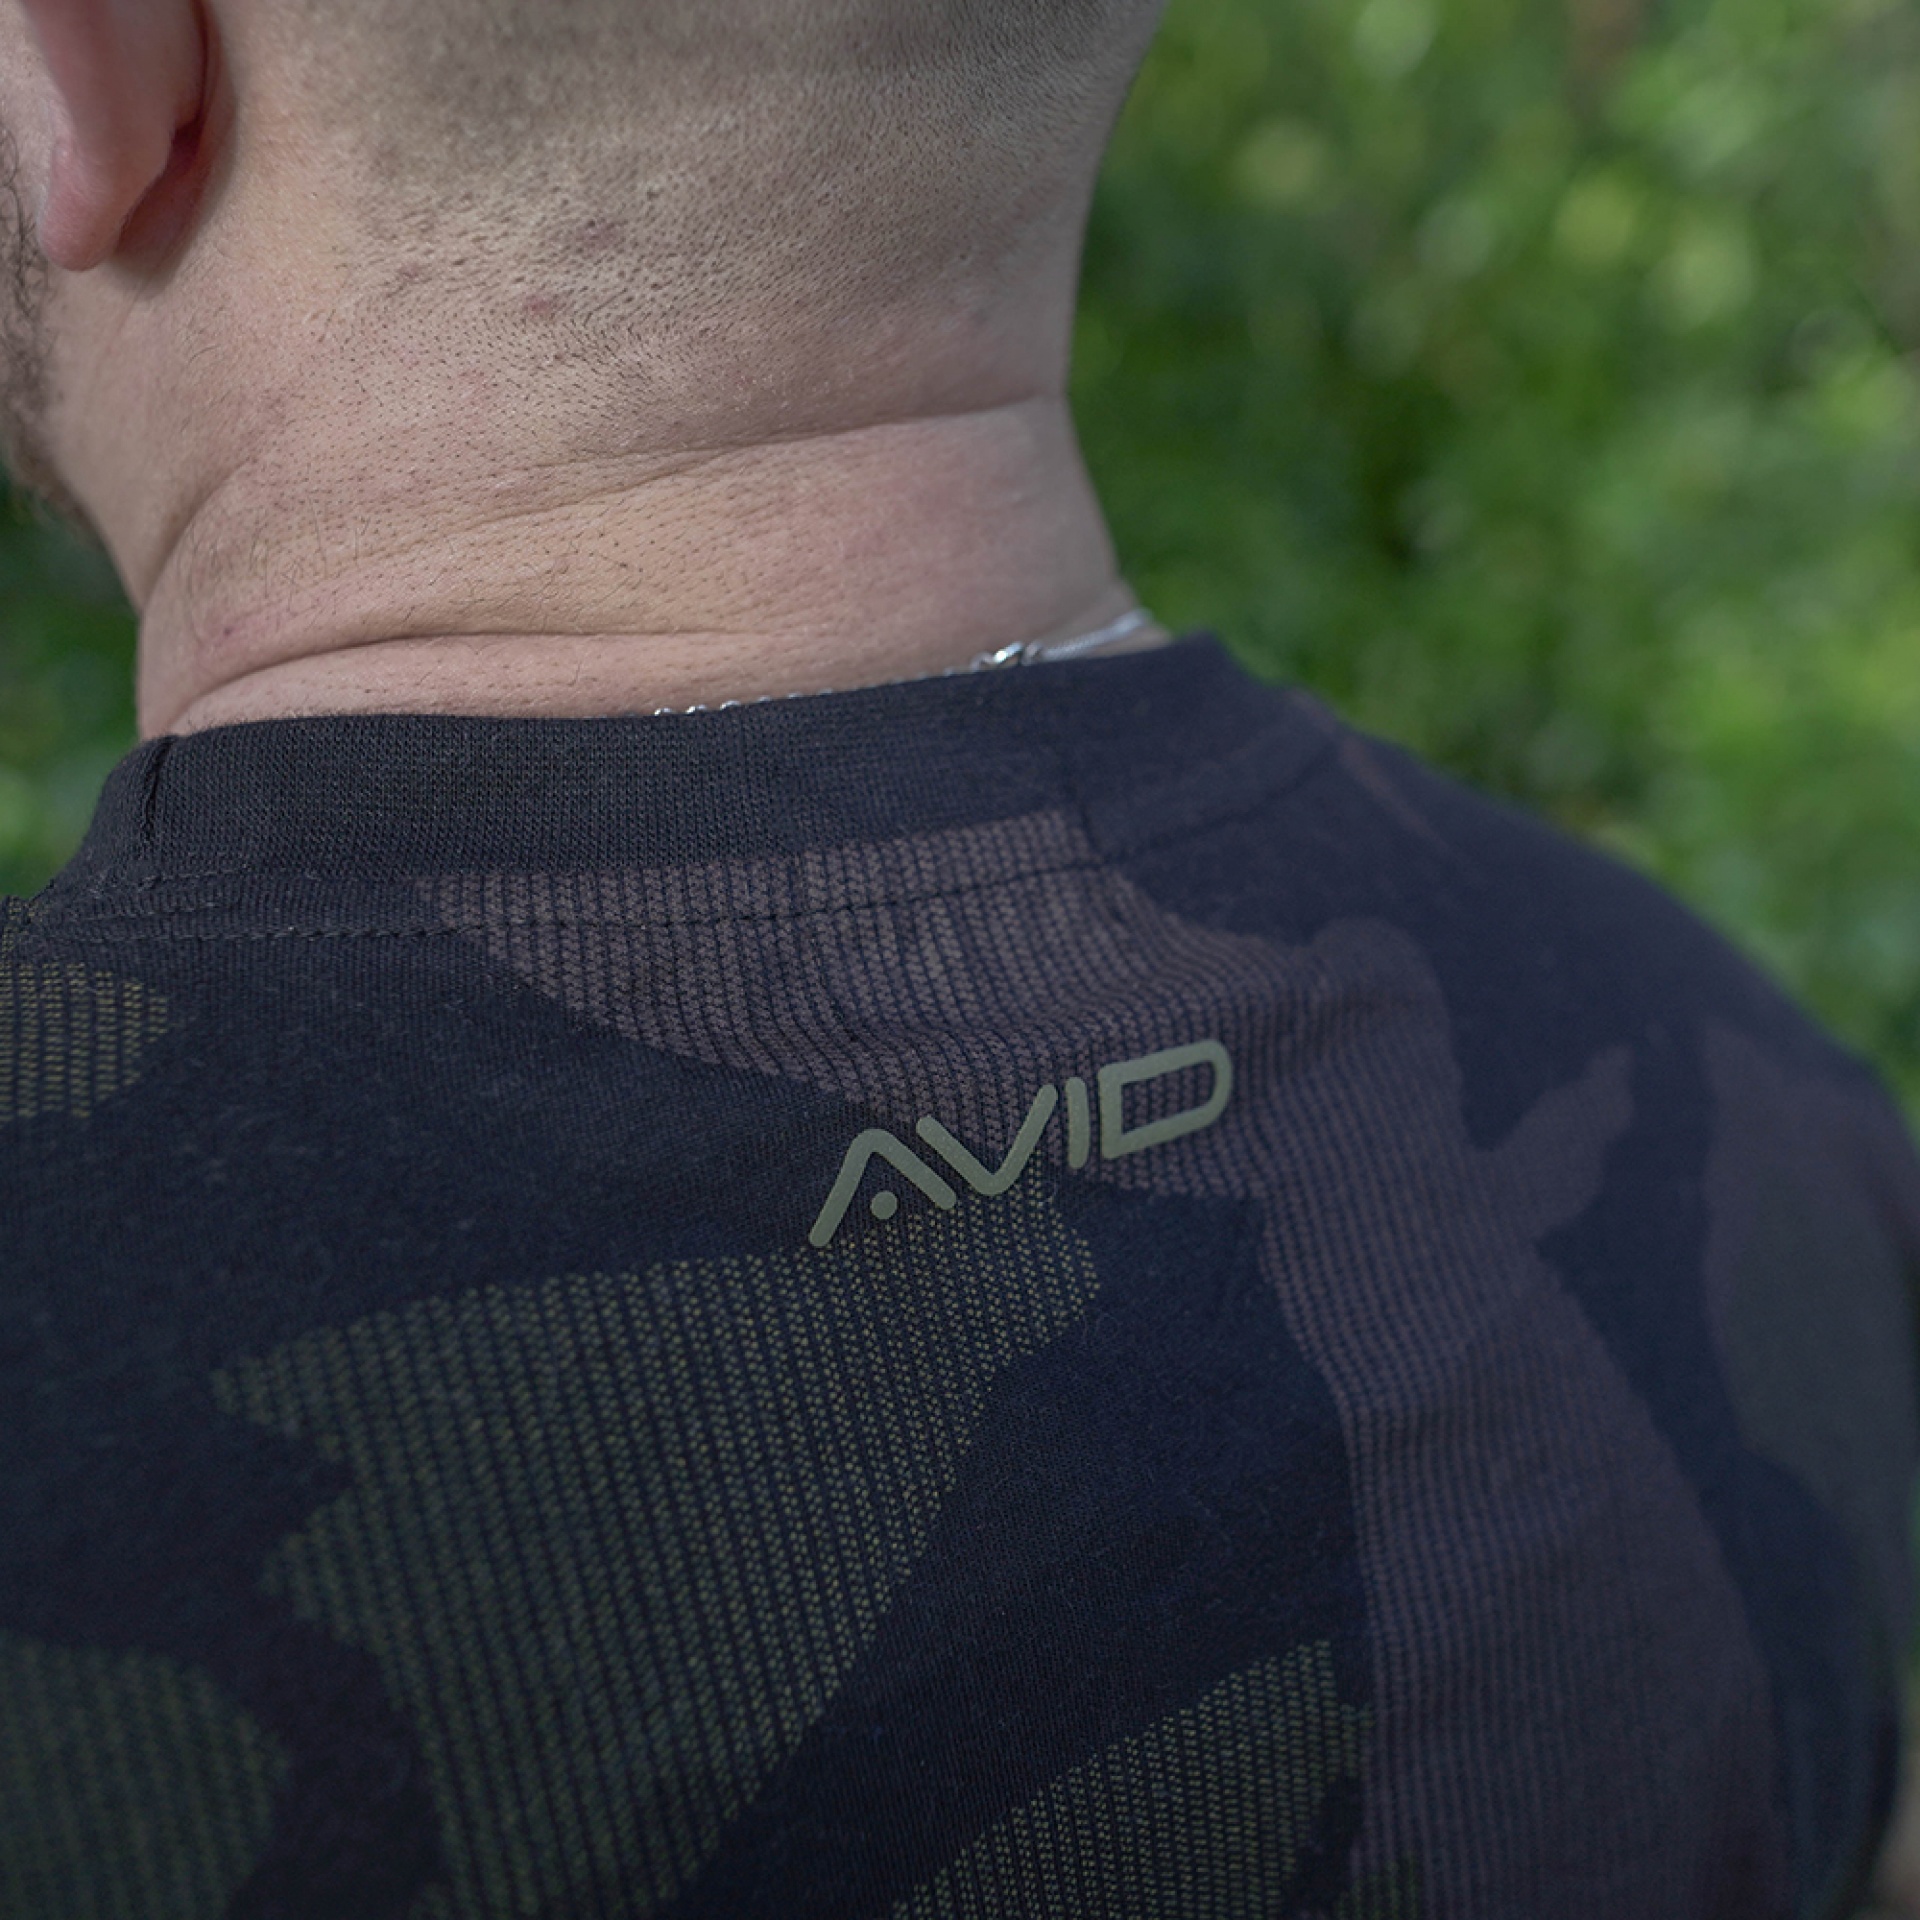 Avid Carp Distortion Camo T-Shirt